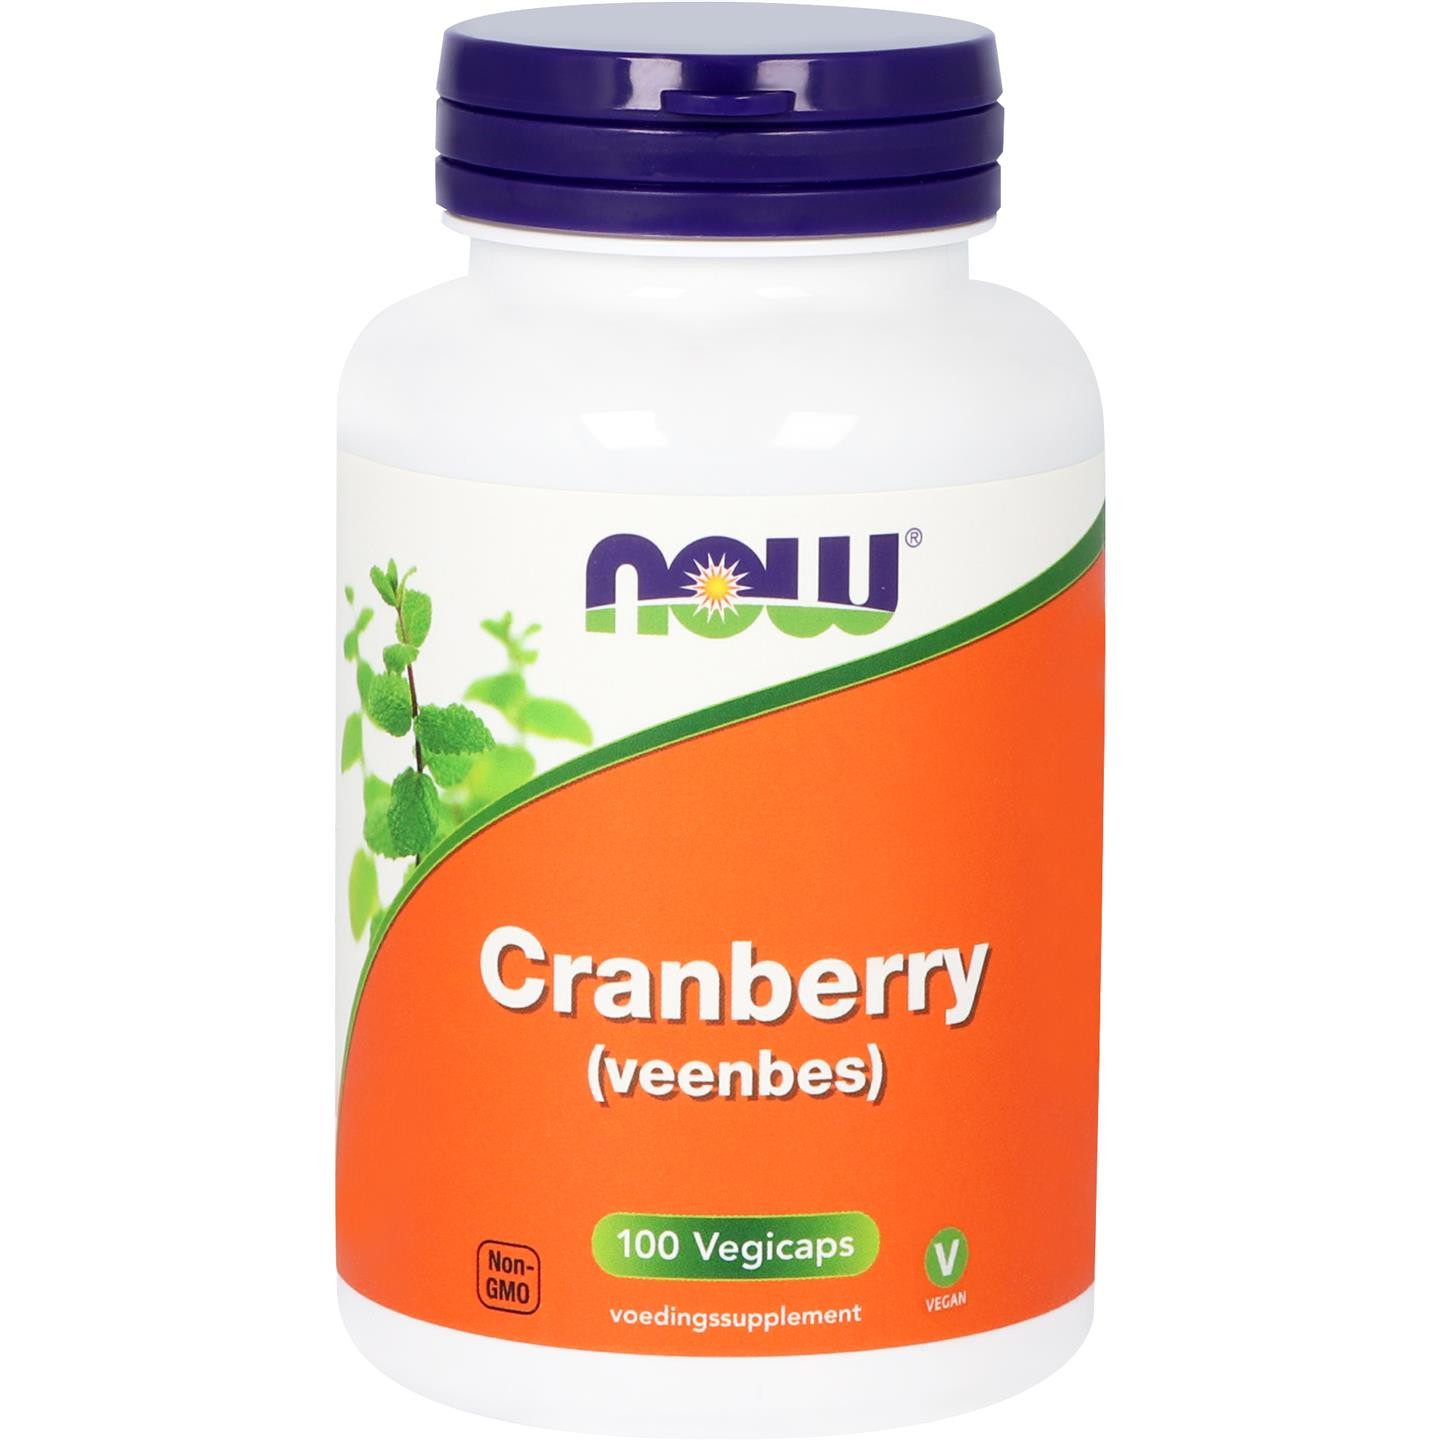 Cranberry (Veenbes)